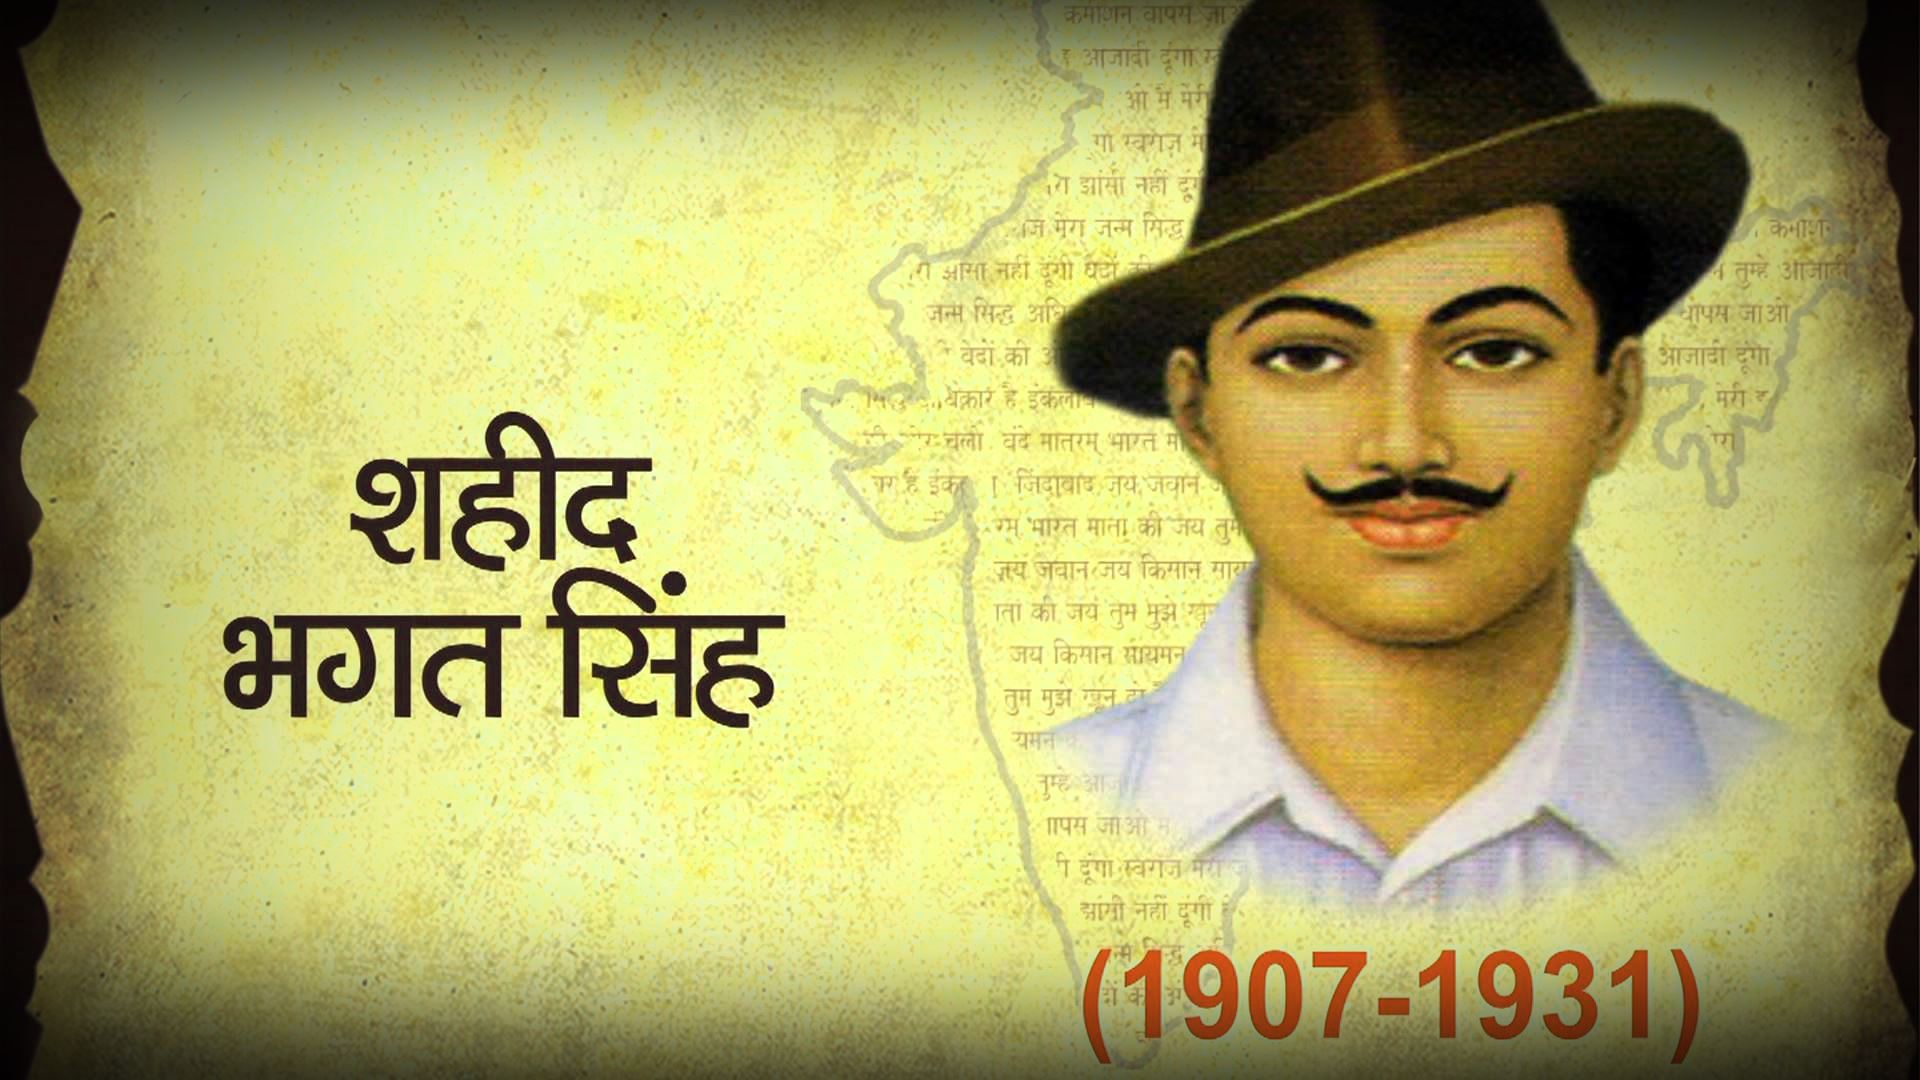 Shaheed Bhagat Singh Date Of Birth - HD Wallpaper 